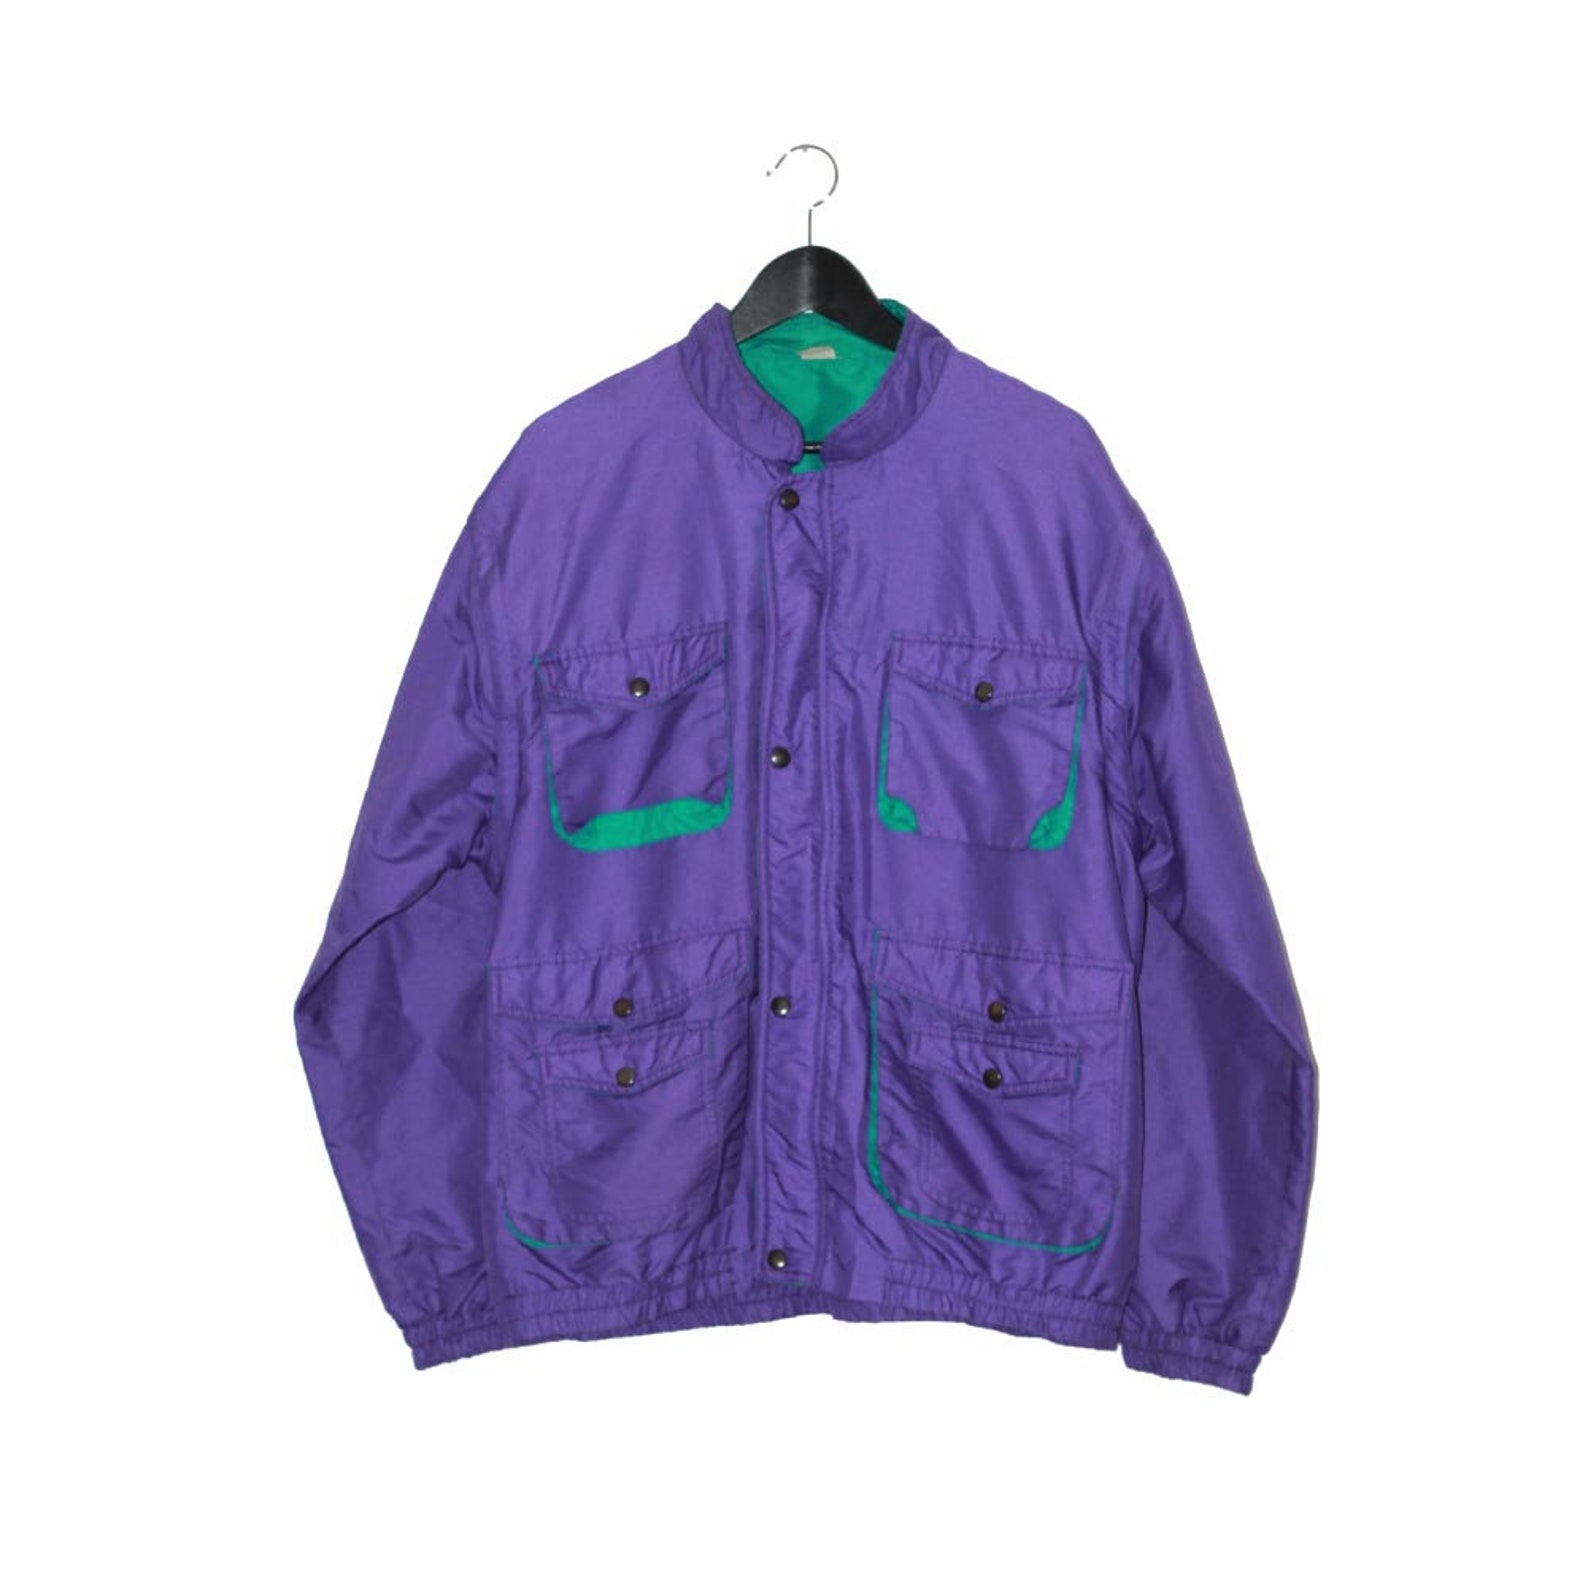 1980s vintage purple jacket unisex reto neon bomber jacket | Etsy